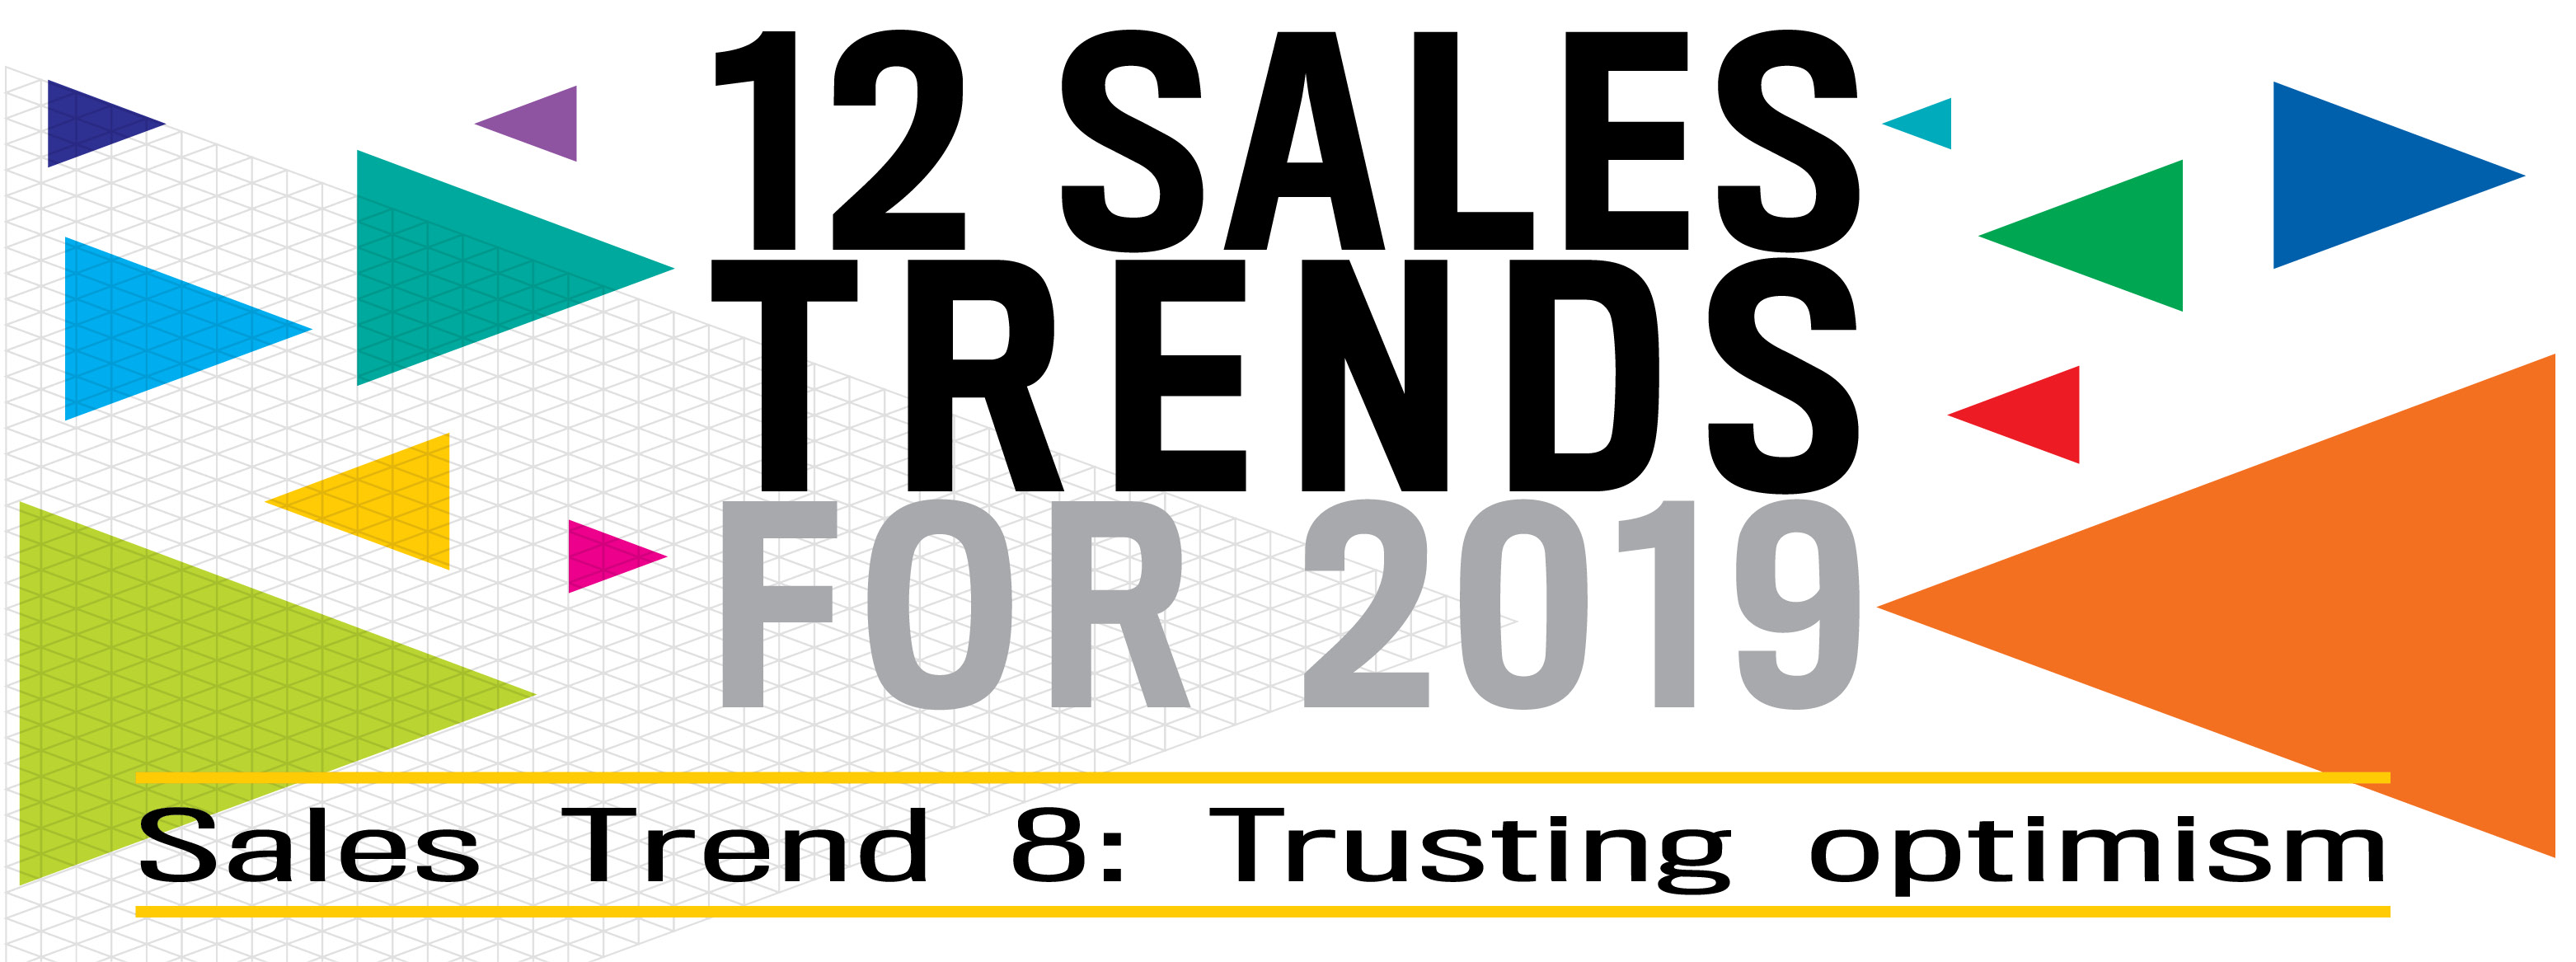 barrett_sales_trends_2019_Trend_6_Trust_me_I_am_a_salesperson